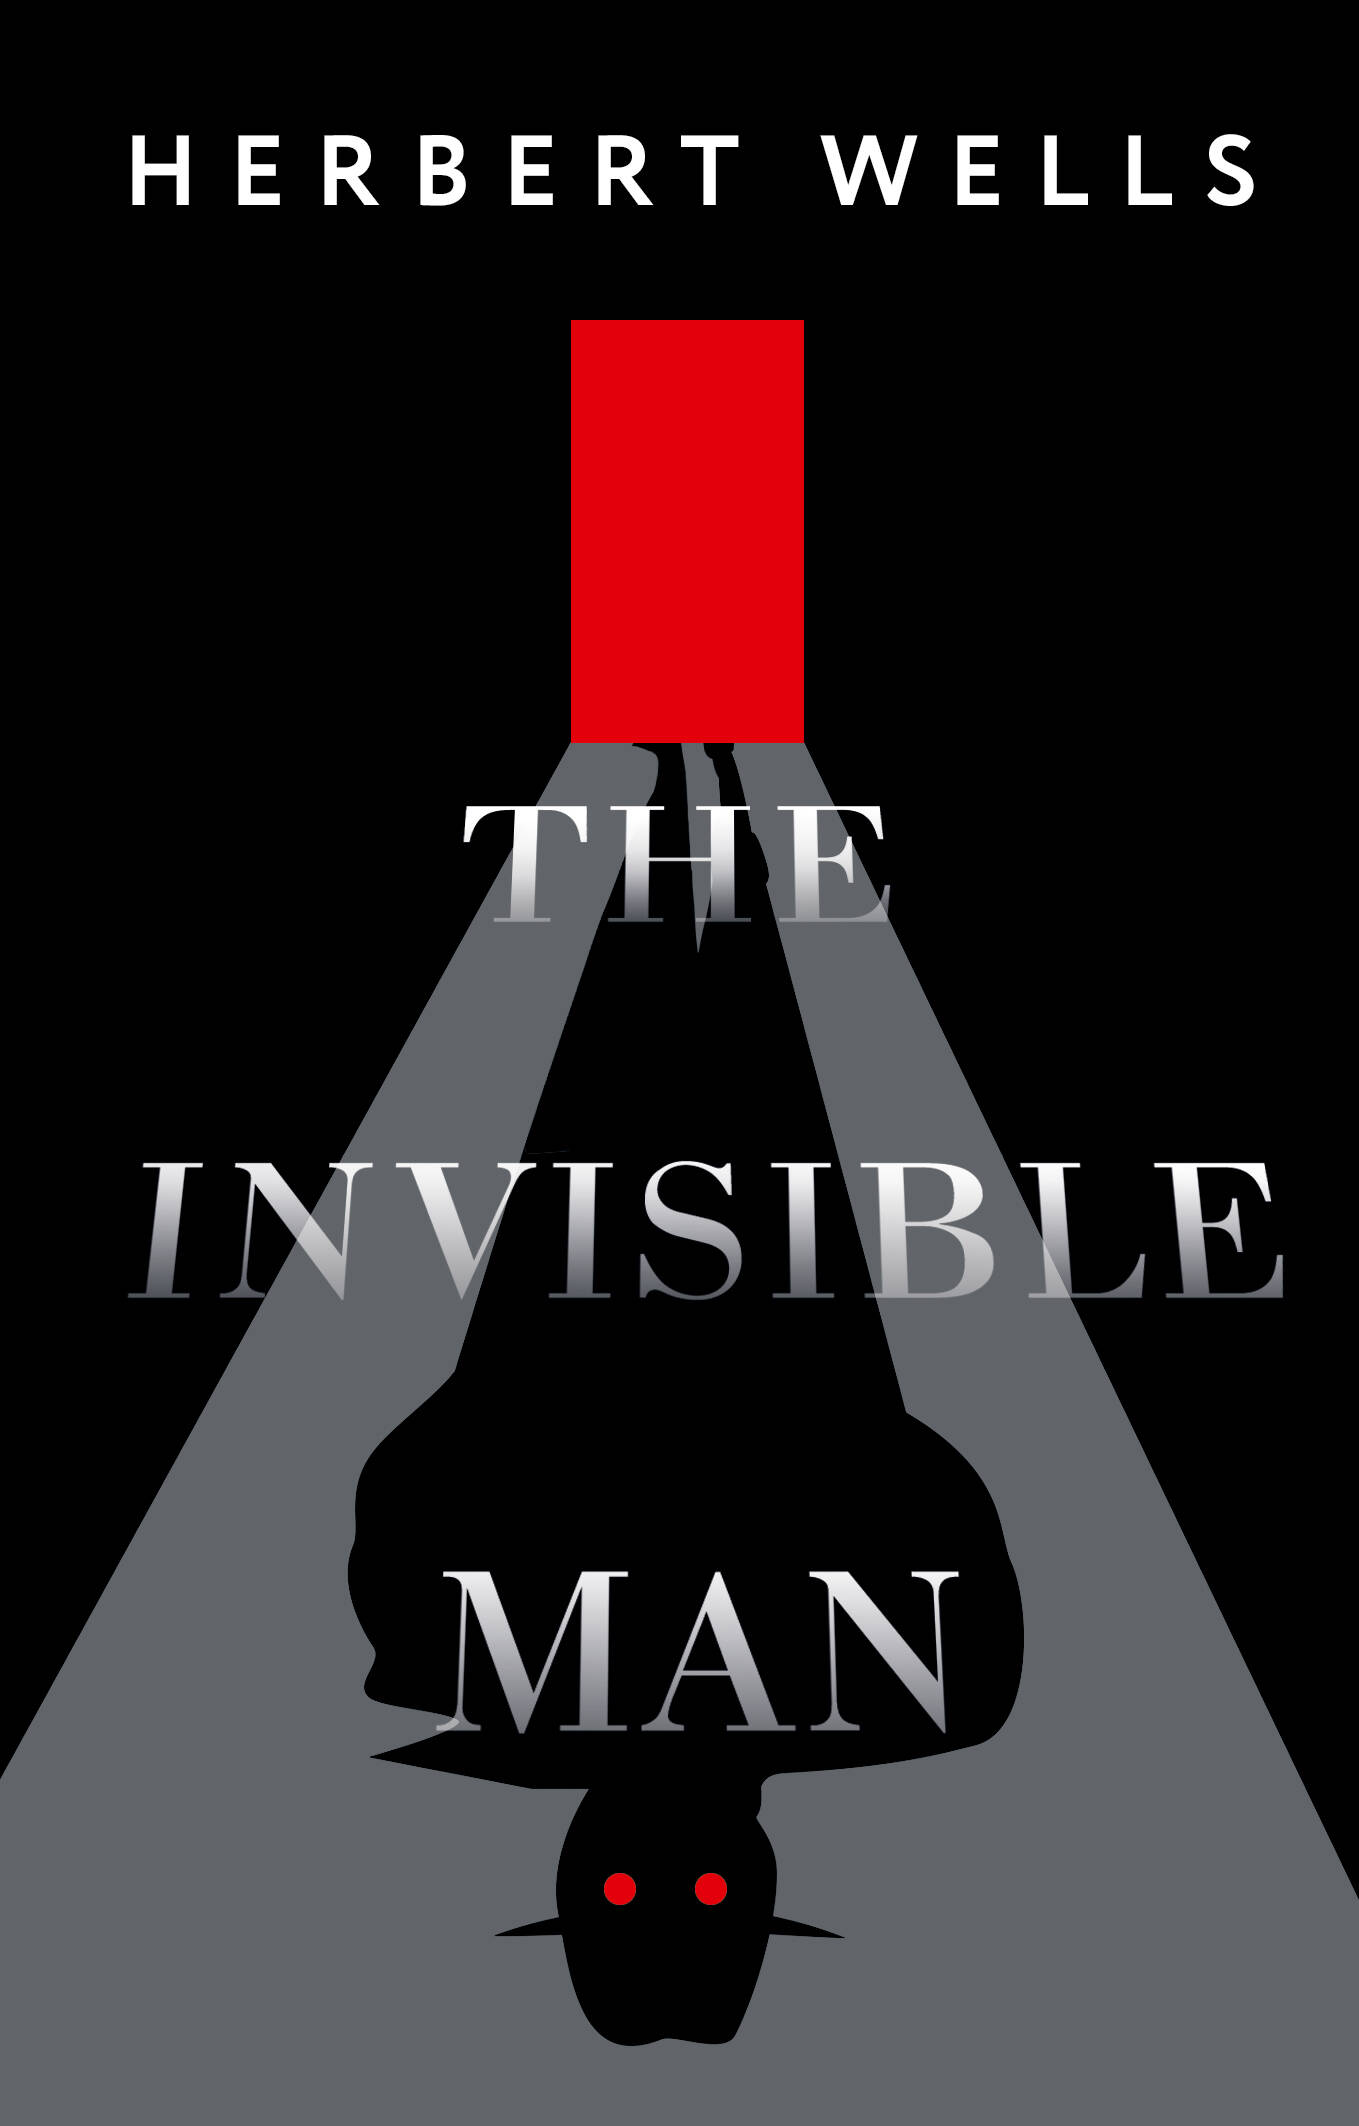 уэллс герберт джордж the invisible man человек нивидимка на английском языке Уэллс Герберт Джордж The Invisible Man